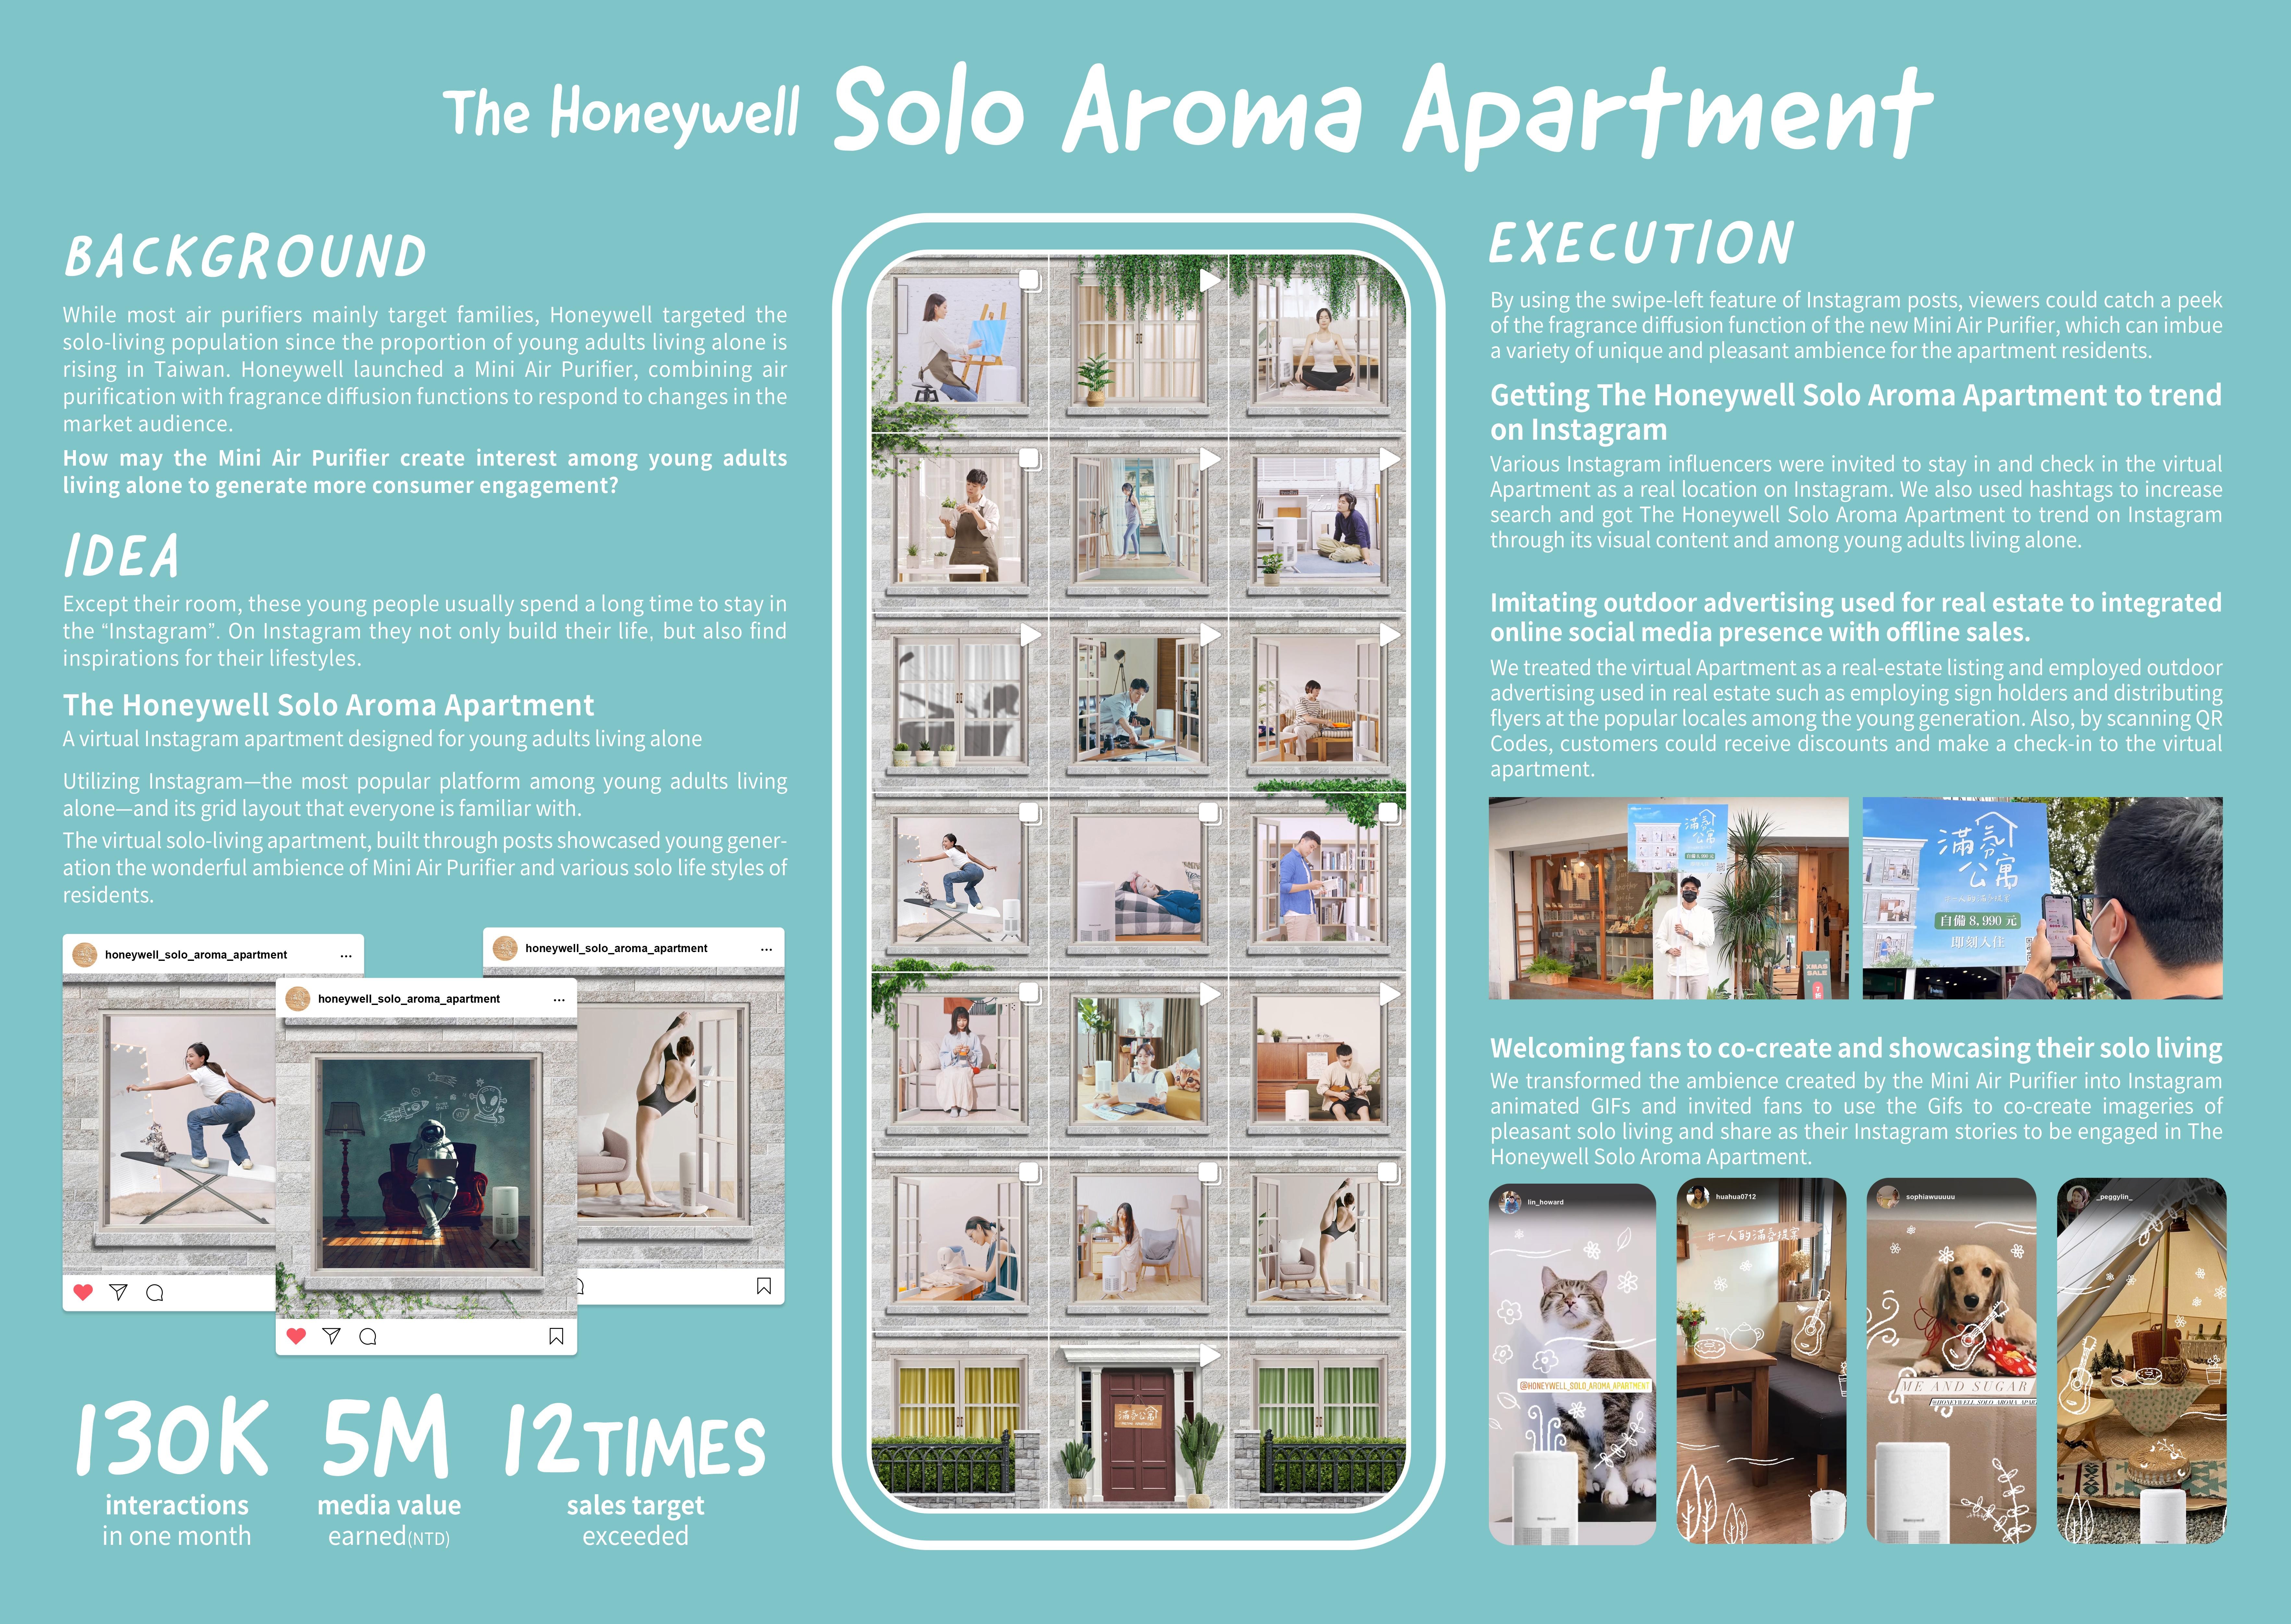 The Honeywell Solo Aroma Apartment